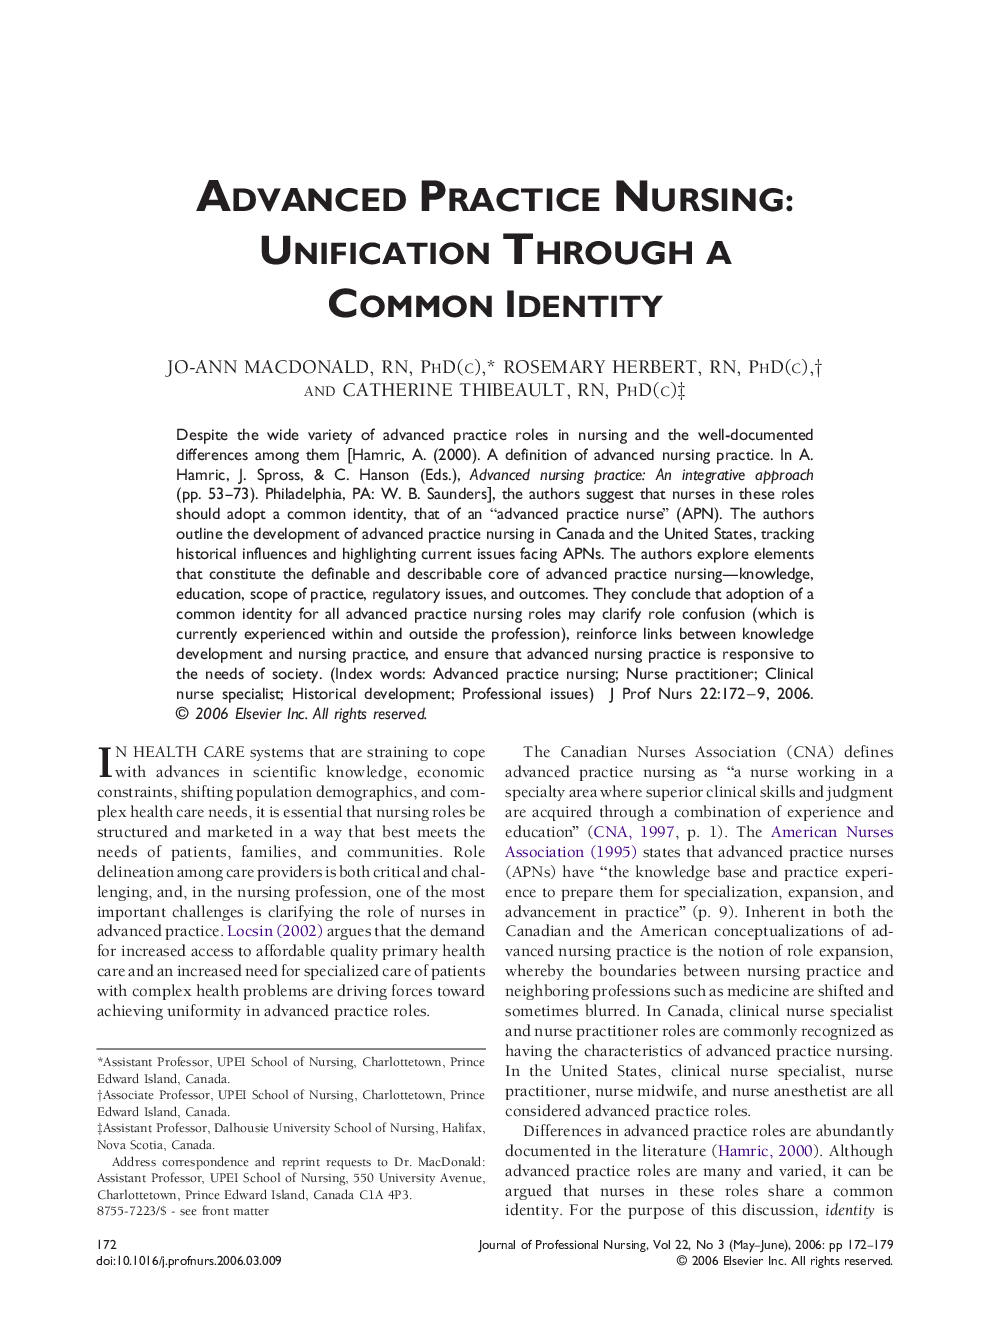 Advanced Practice Nursing: Unification Through a Common Identity